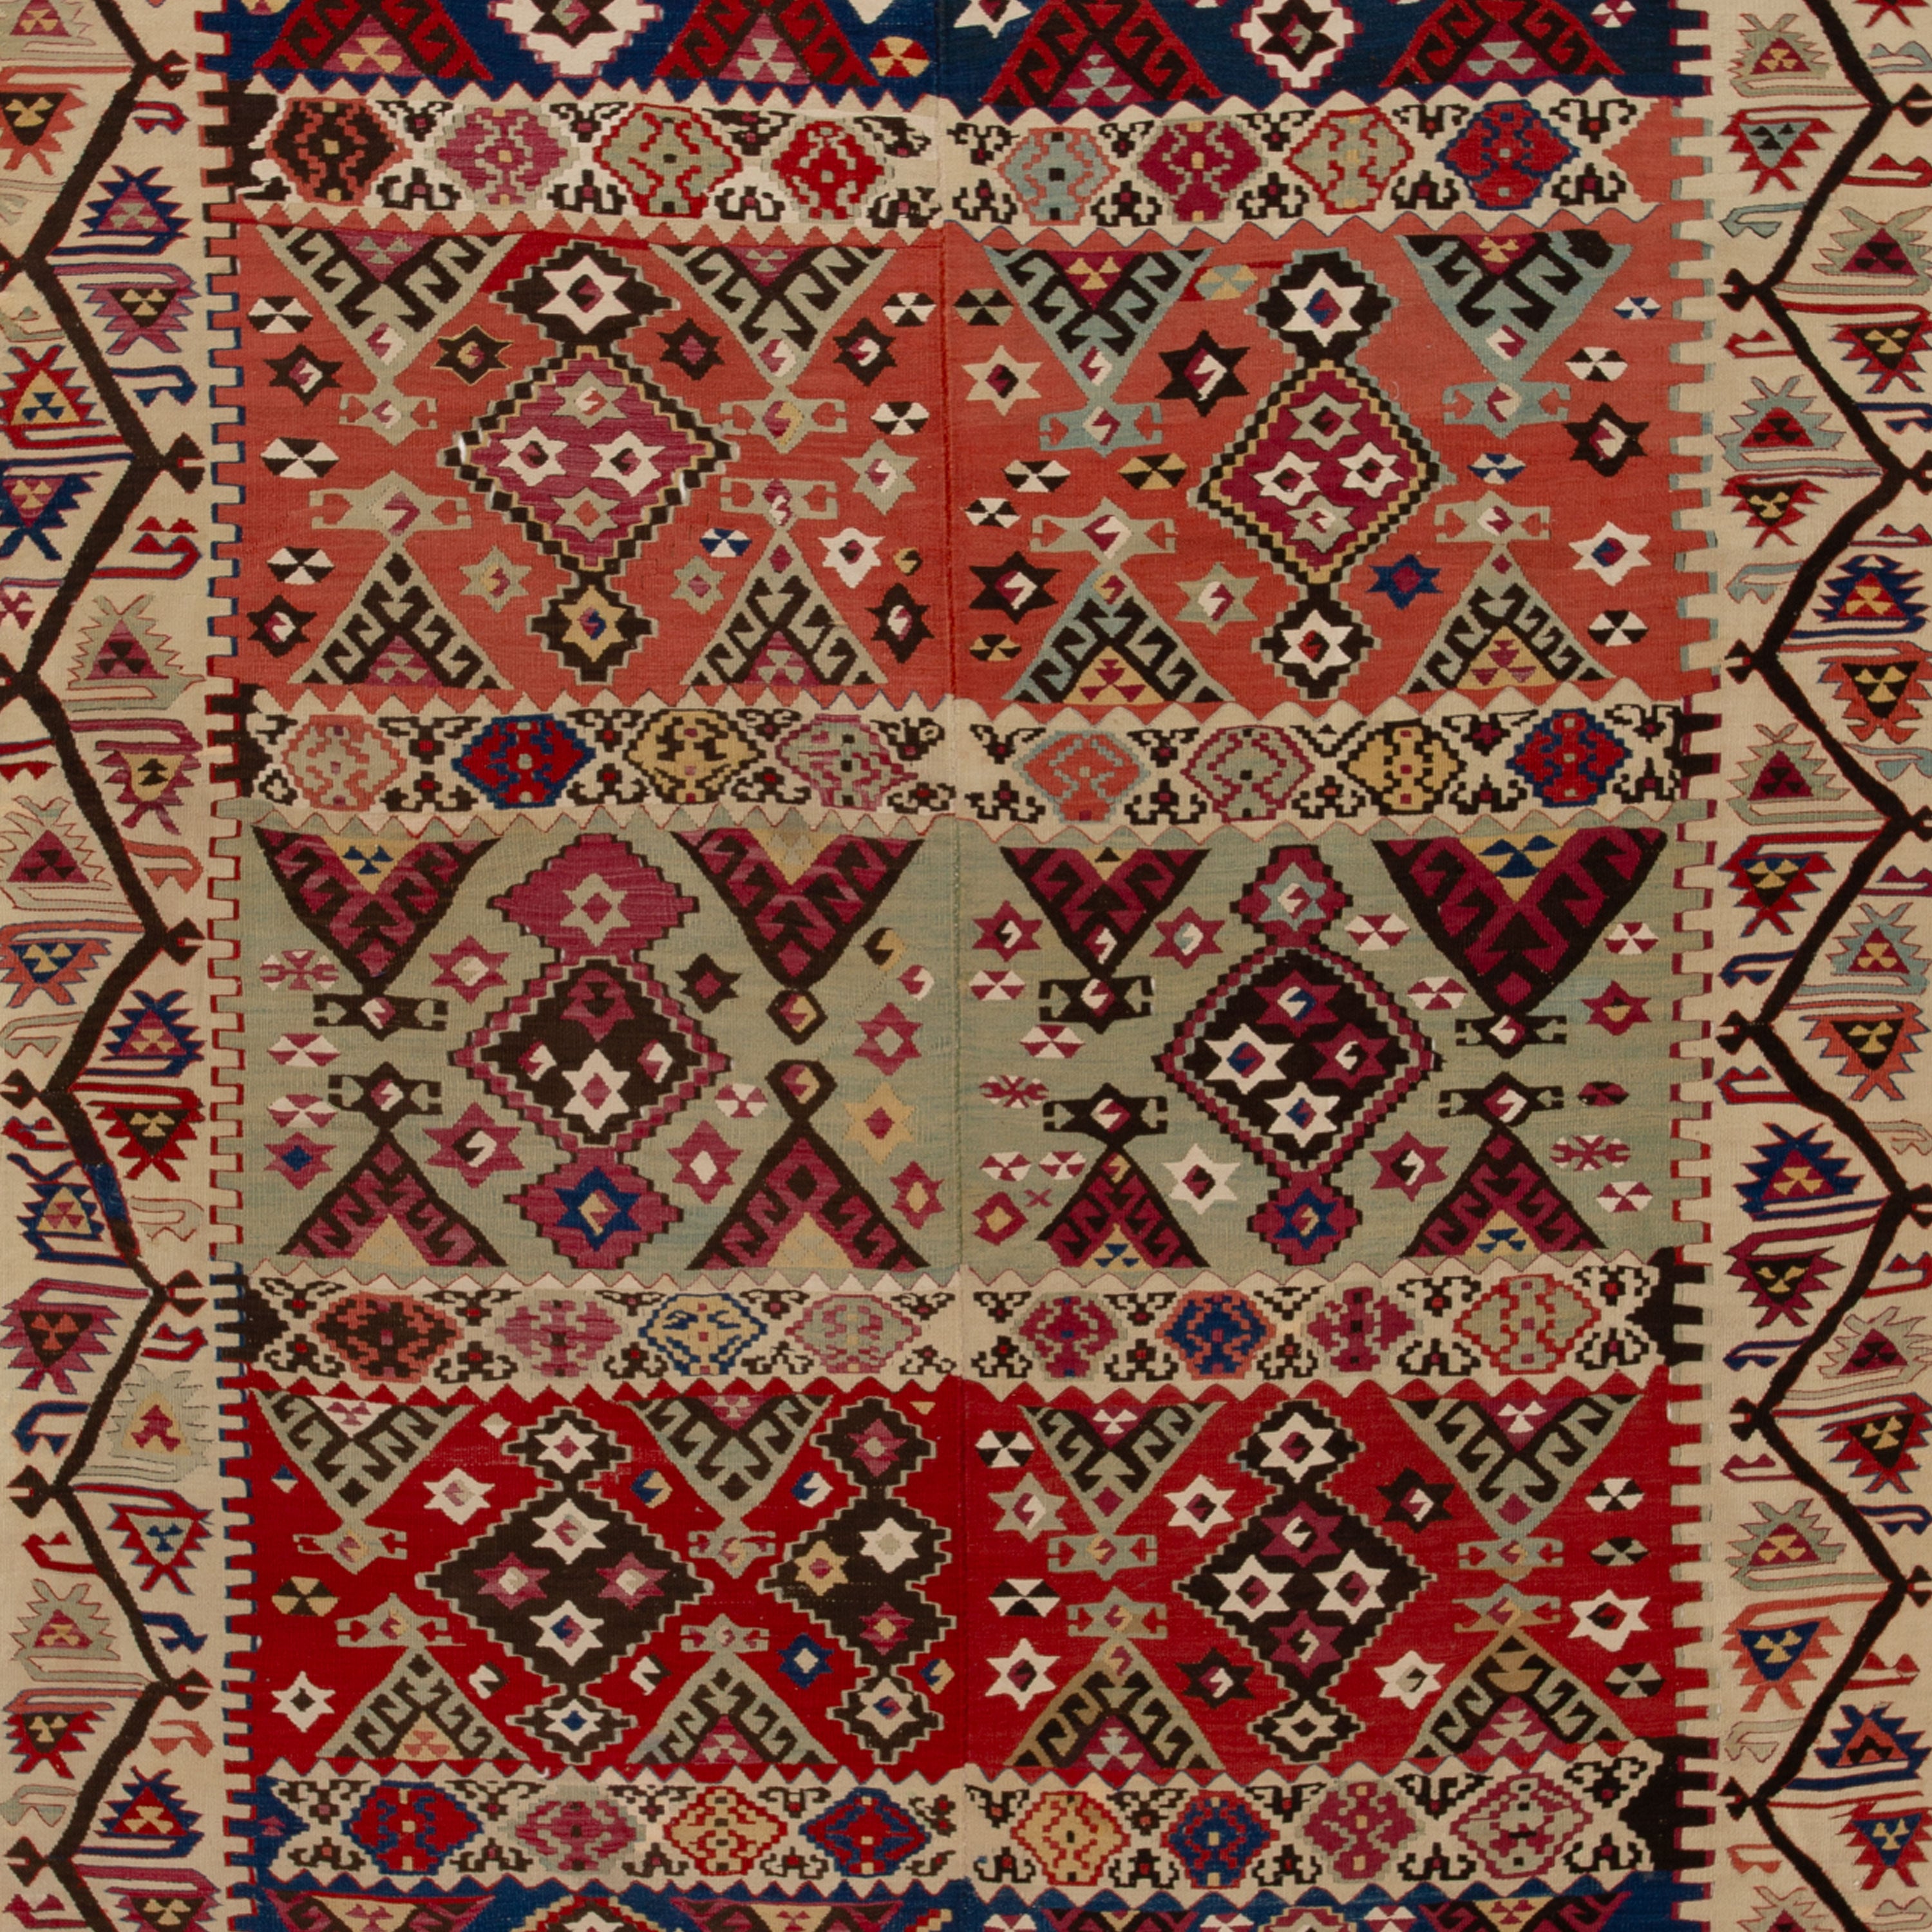 Vintage Flatweave Wool Turkish Kilim Runner - 5'3" x 13'1"